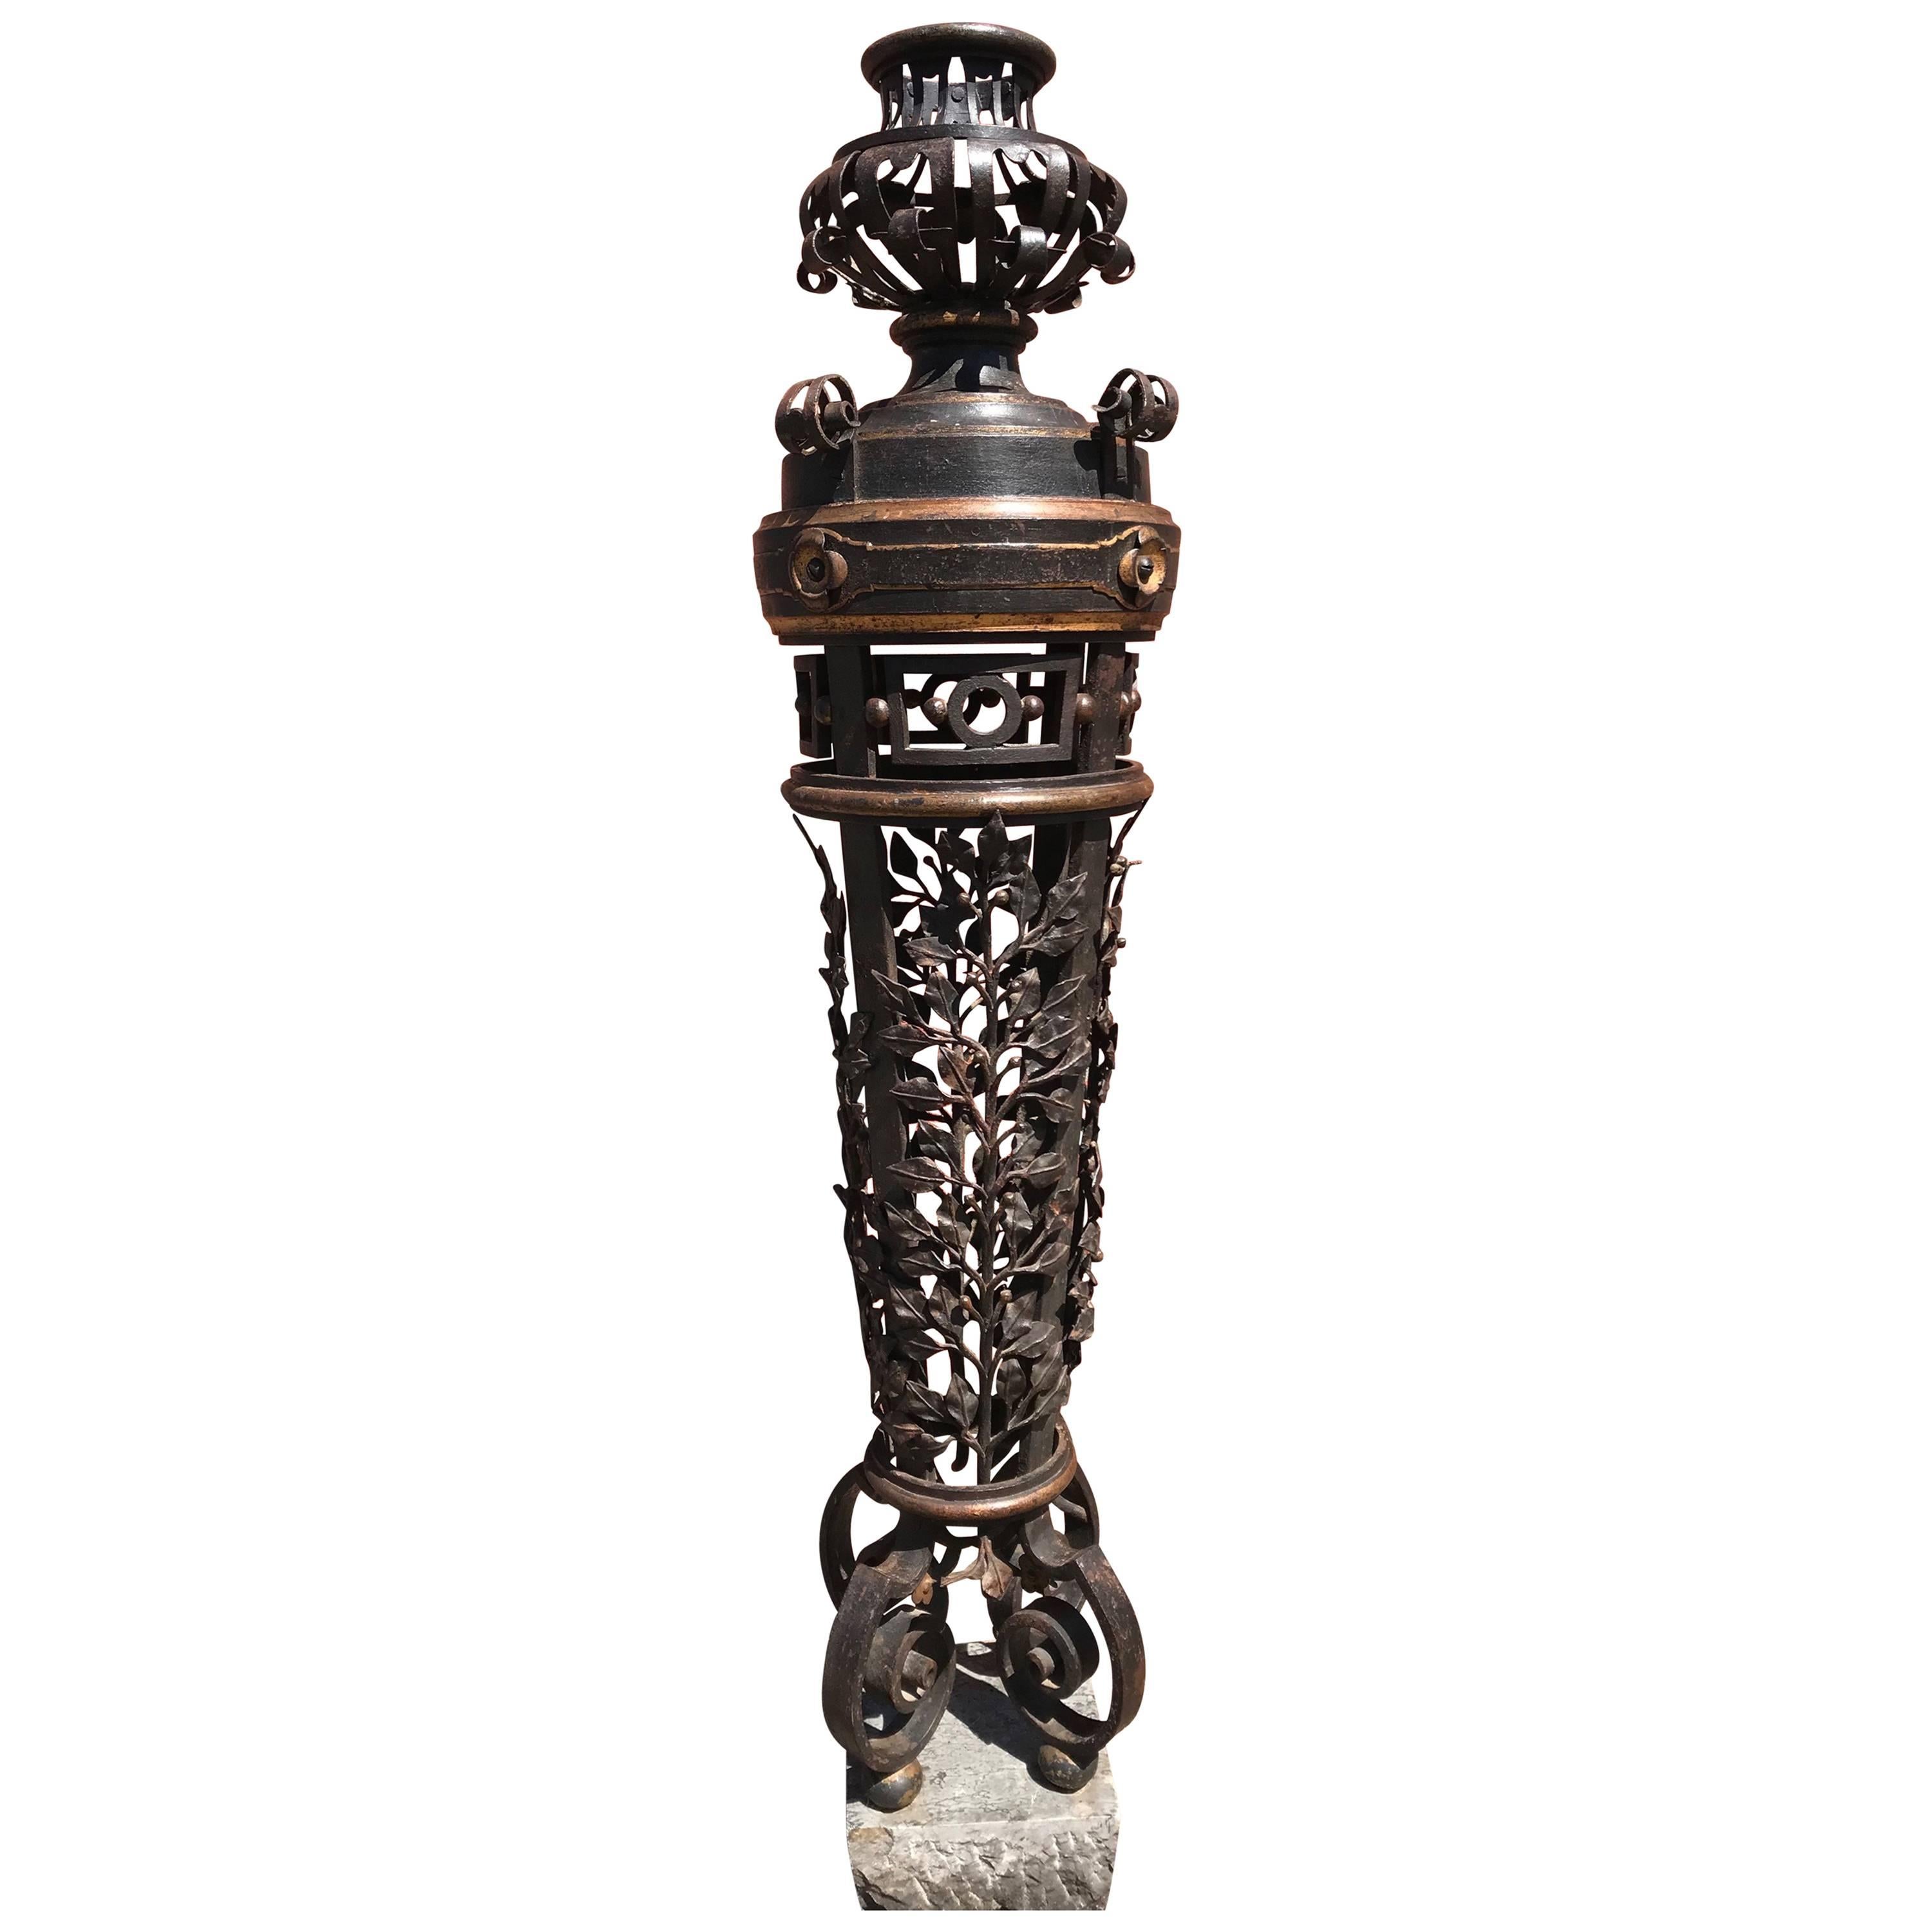 Stunning 19th Century Wrought Iron Newel Post Pedestal / Display Stand / Column